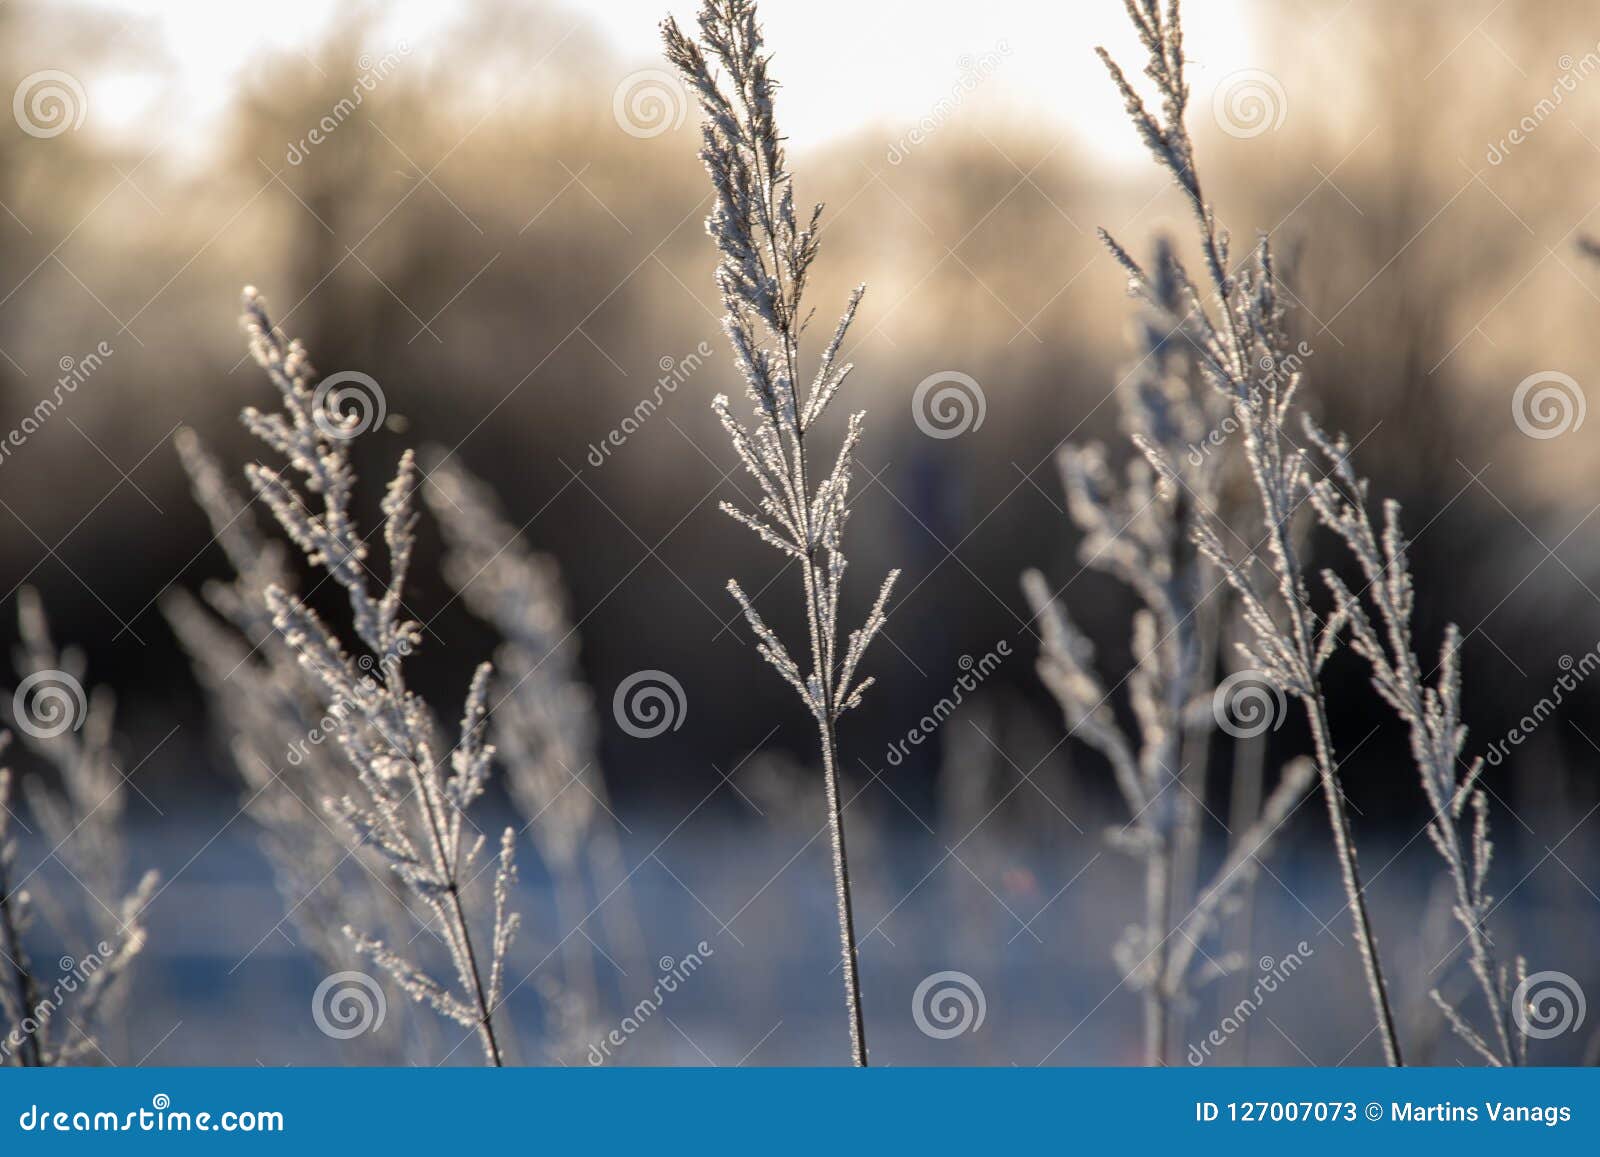 Frozen Vegetation in Winter on Blur Background Stock Image - Image of ...